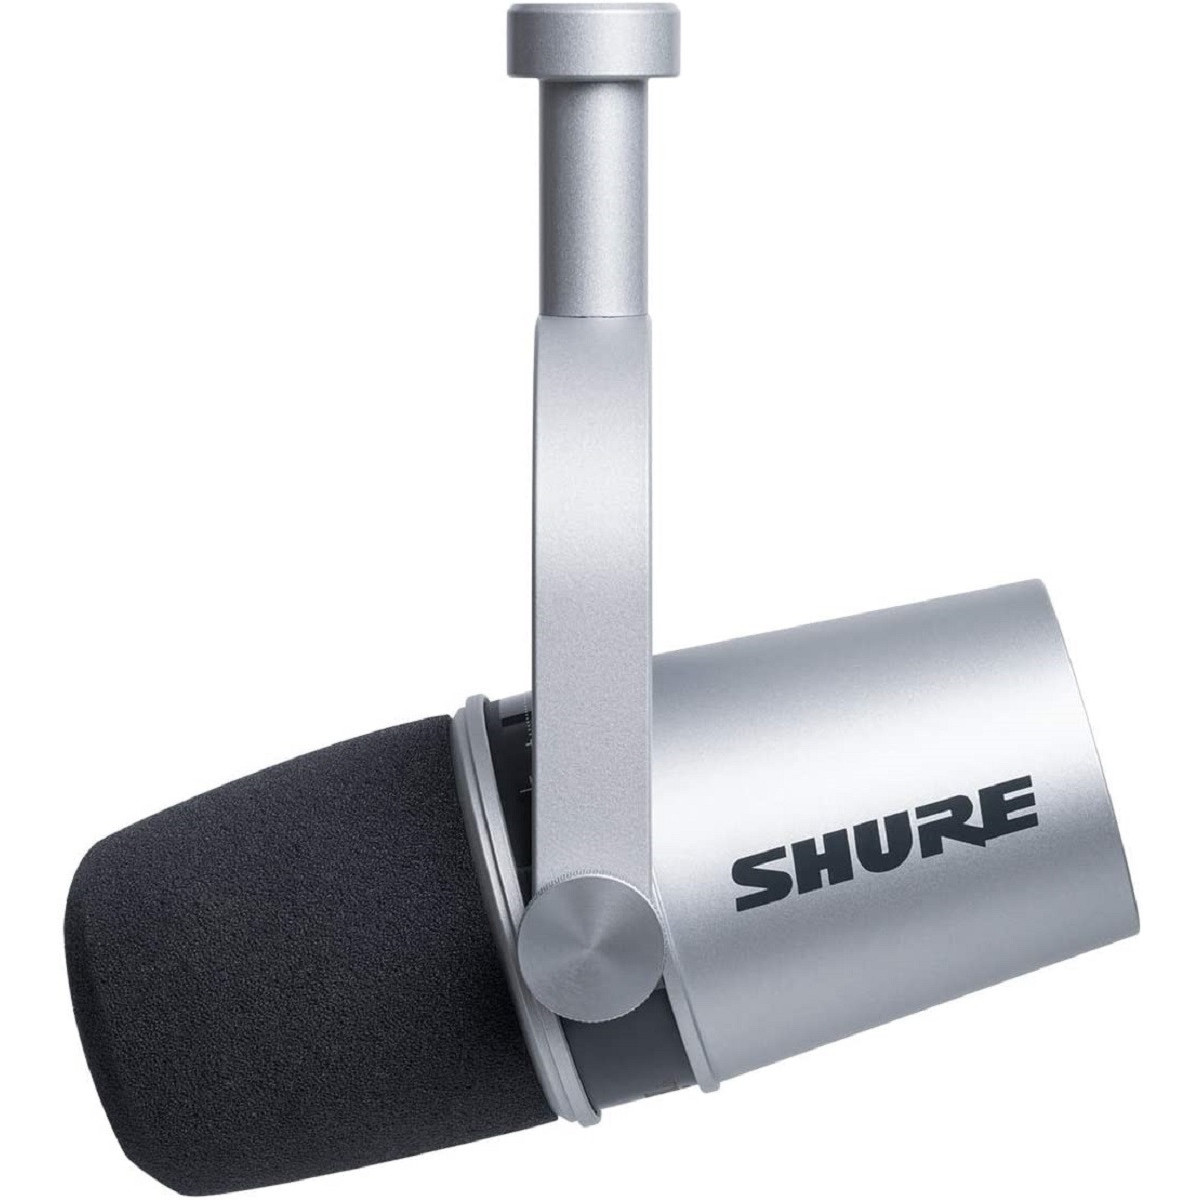 Shure MV7 Silver, comprar online